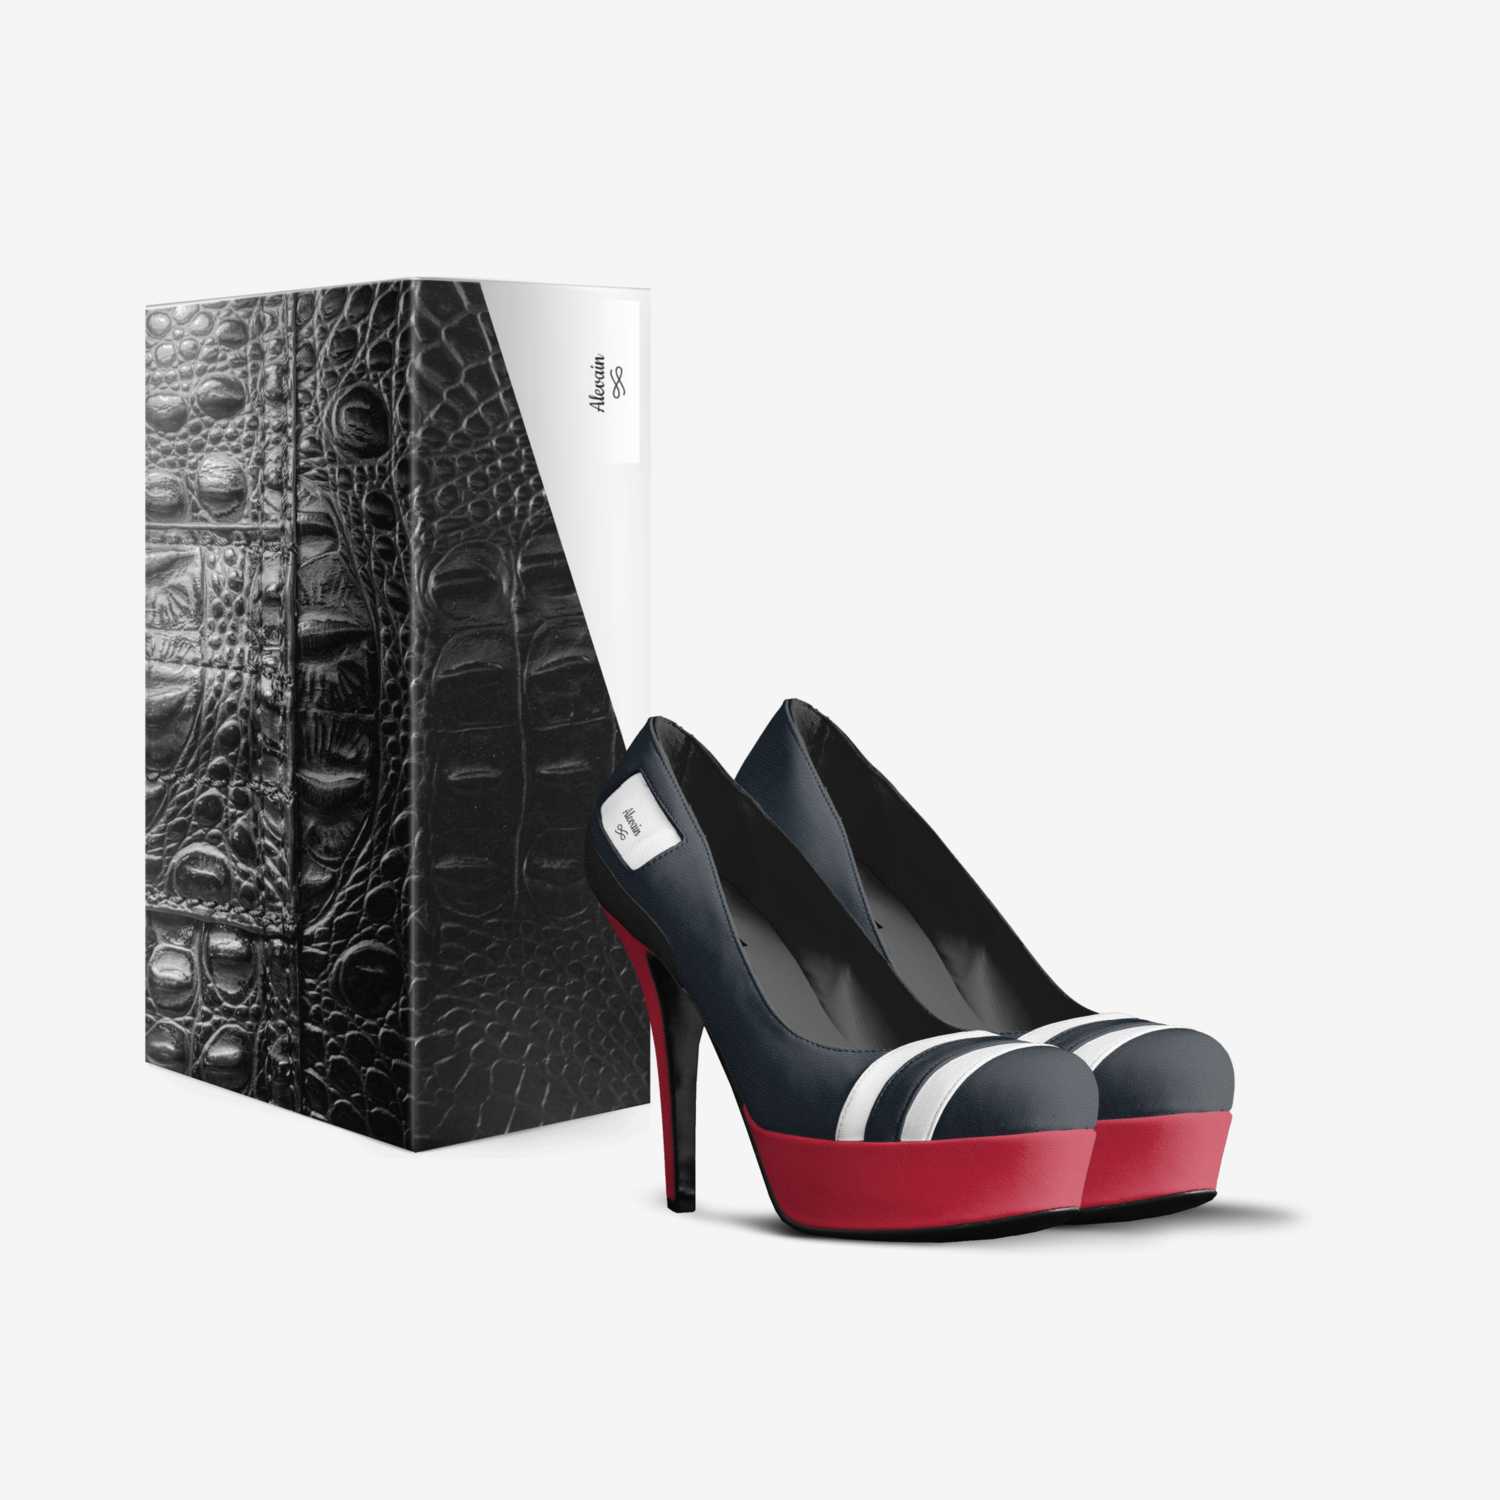 Alevain  custom made in Italy shoes by Latoya Boyce | Box view